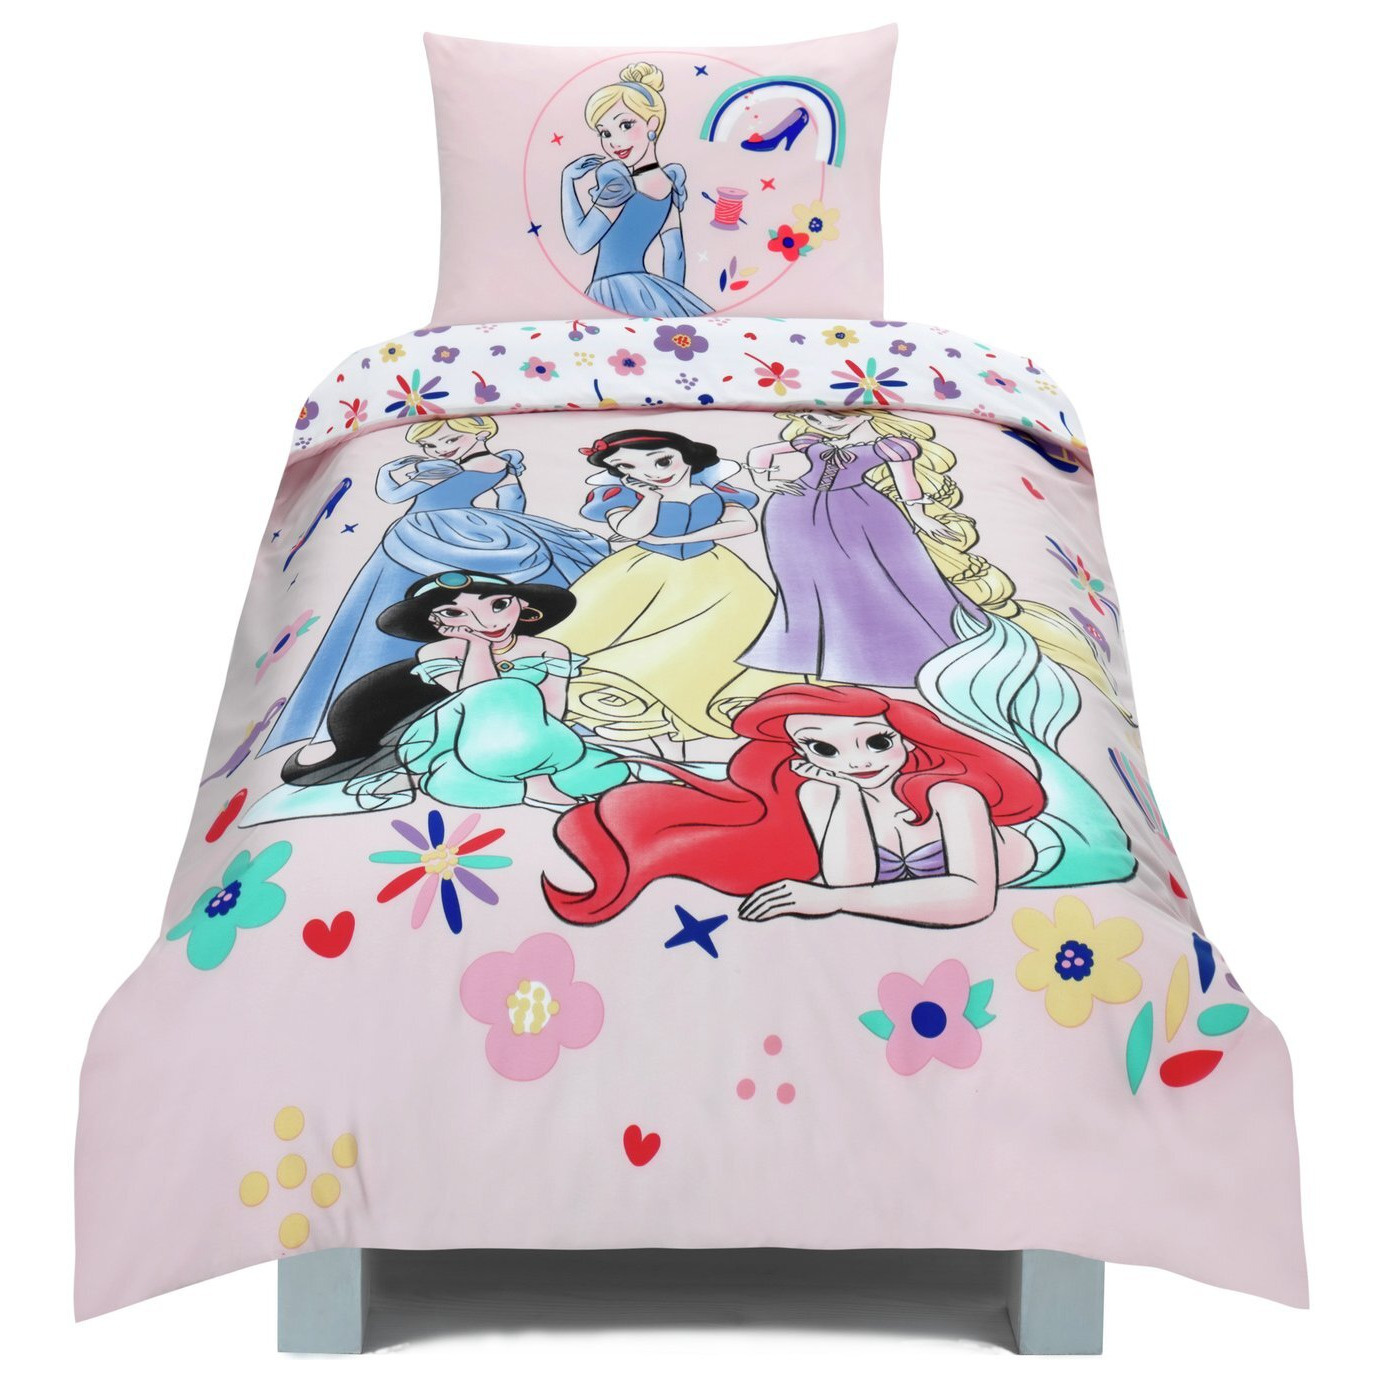 Disney Princesses Pink Kids Bedding Set - Single - image 1